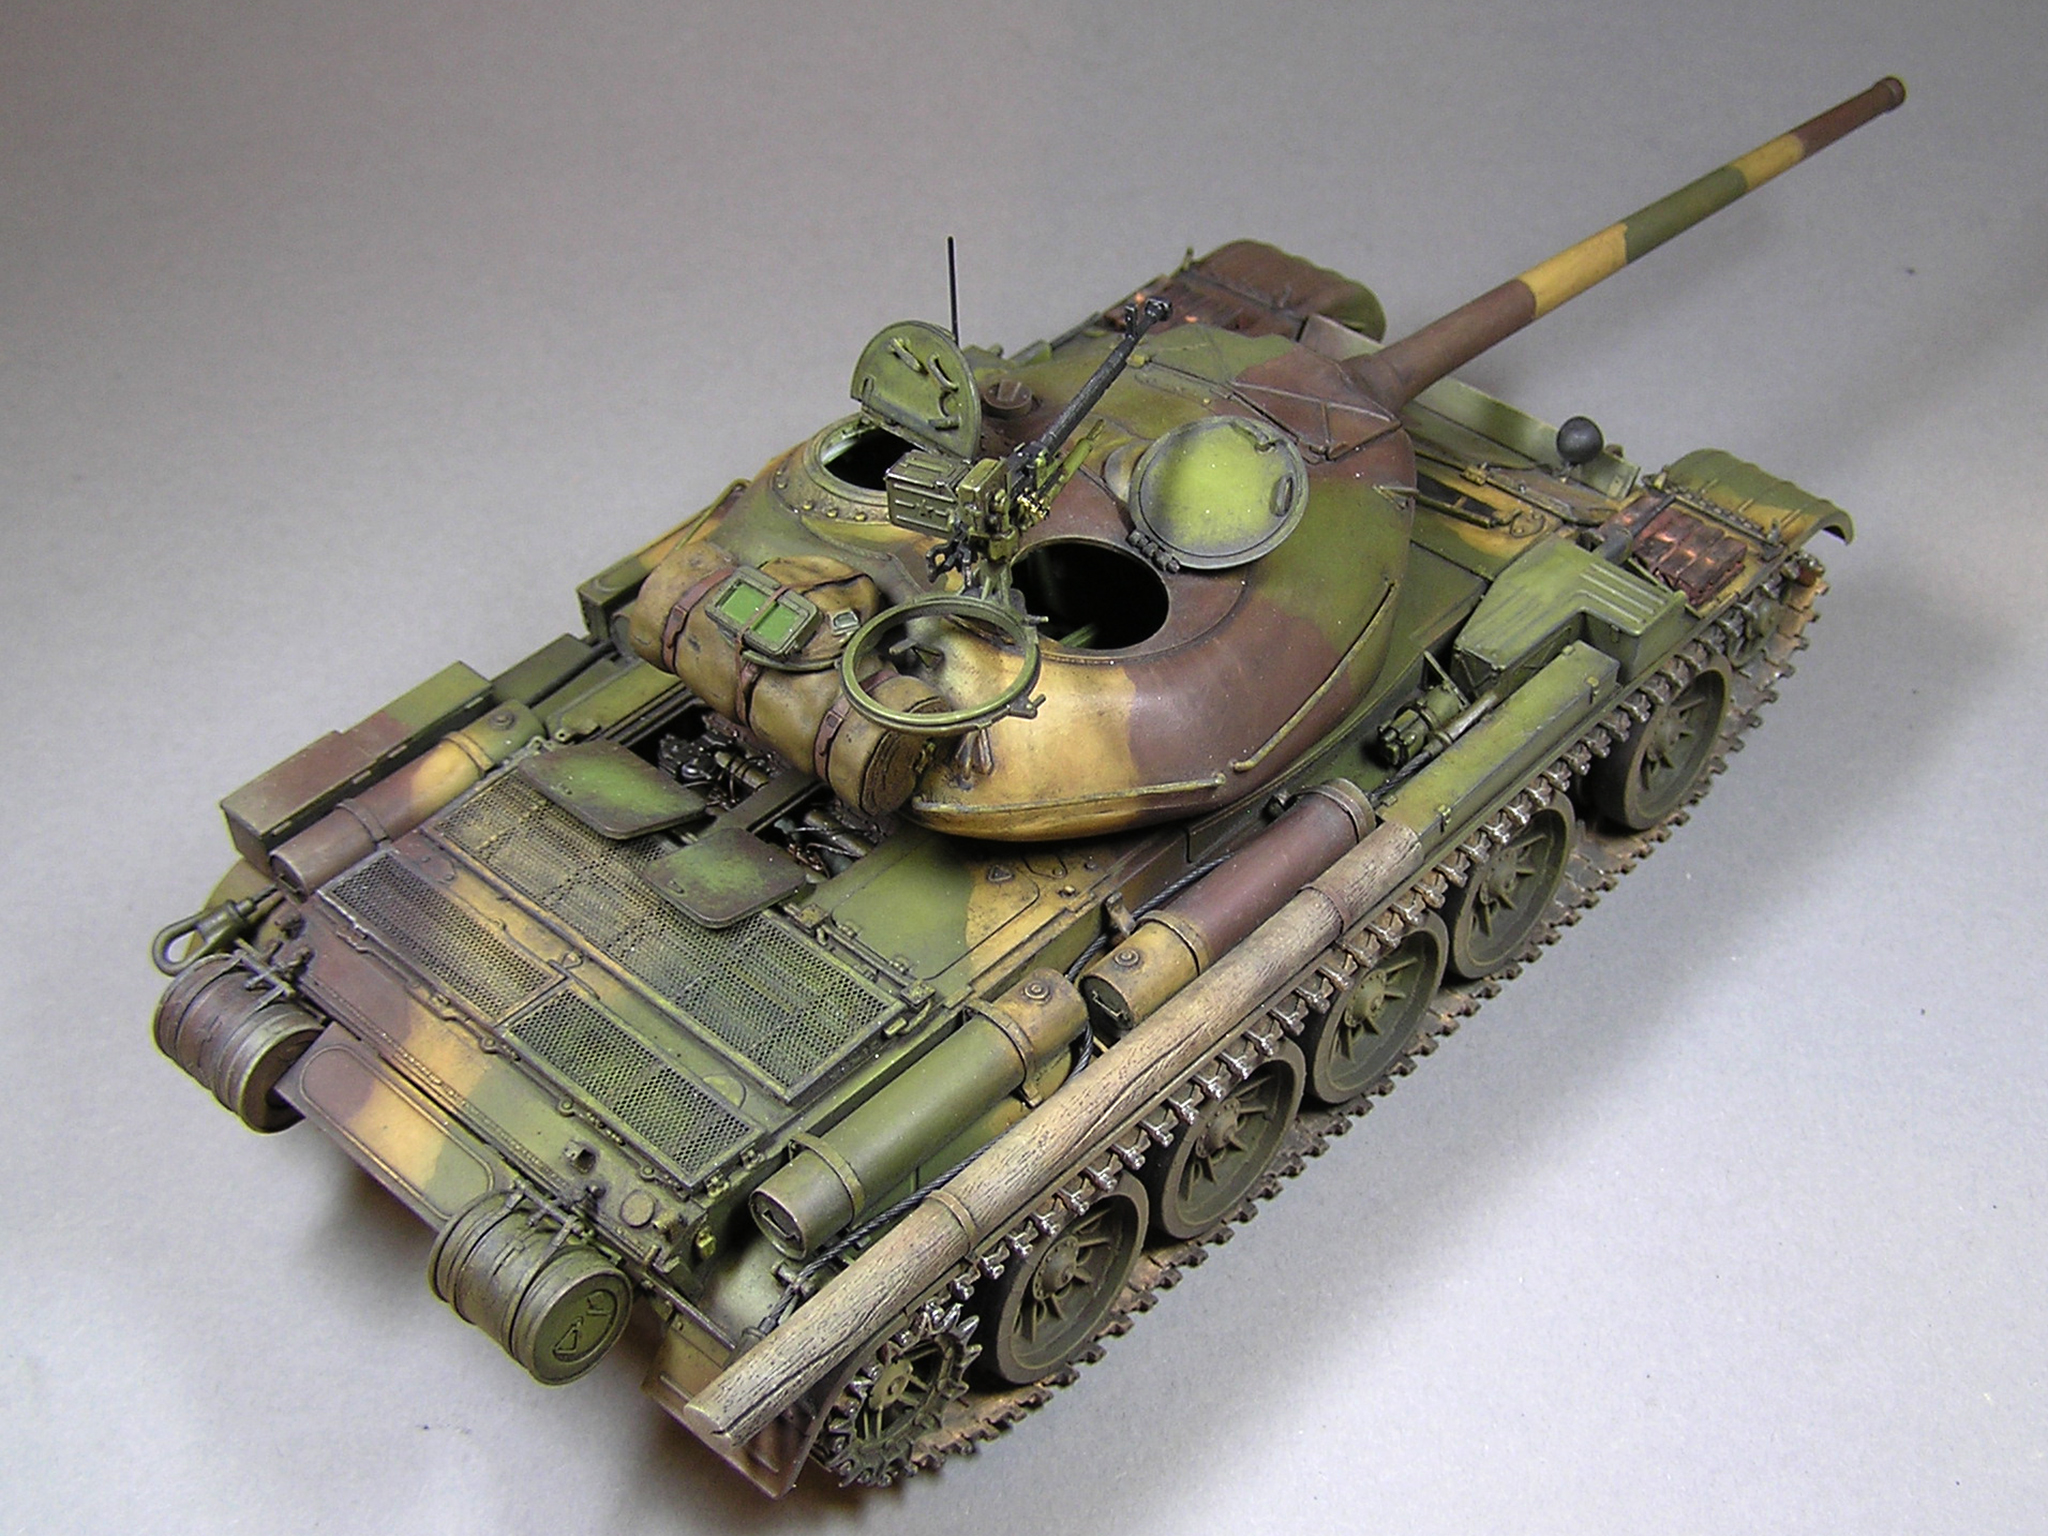 T-54-1 Soviet Medium Tank Interior Kit 1/35 MiniArt 37003 for sale online